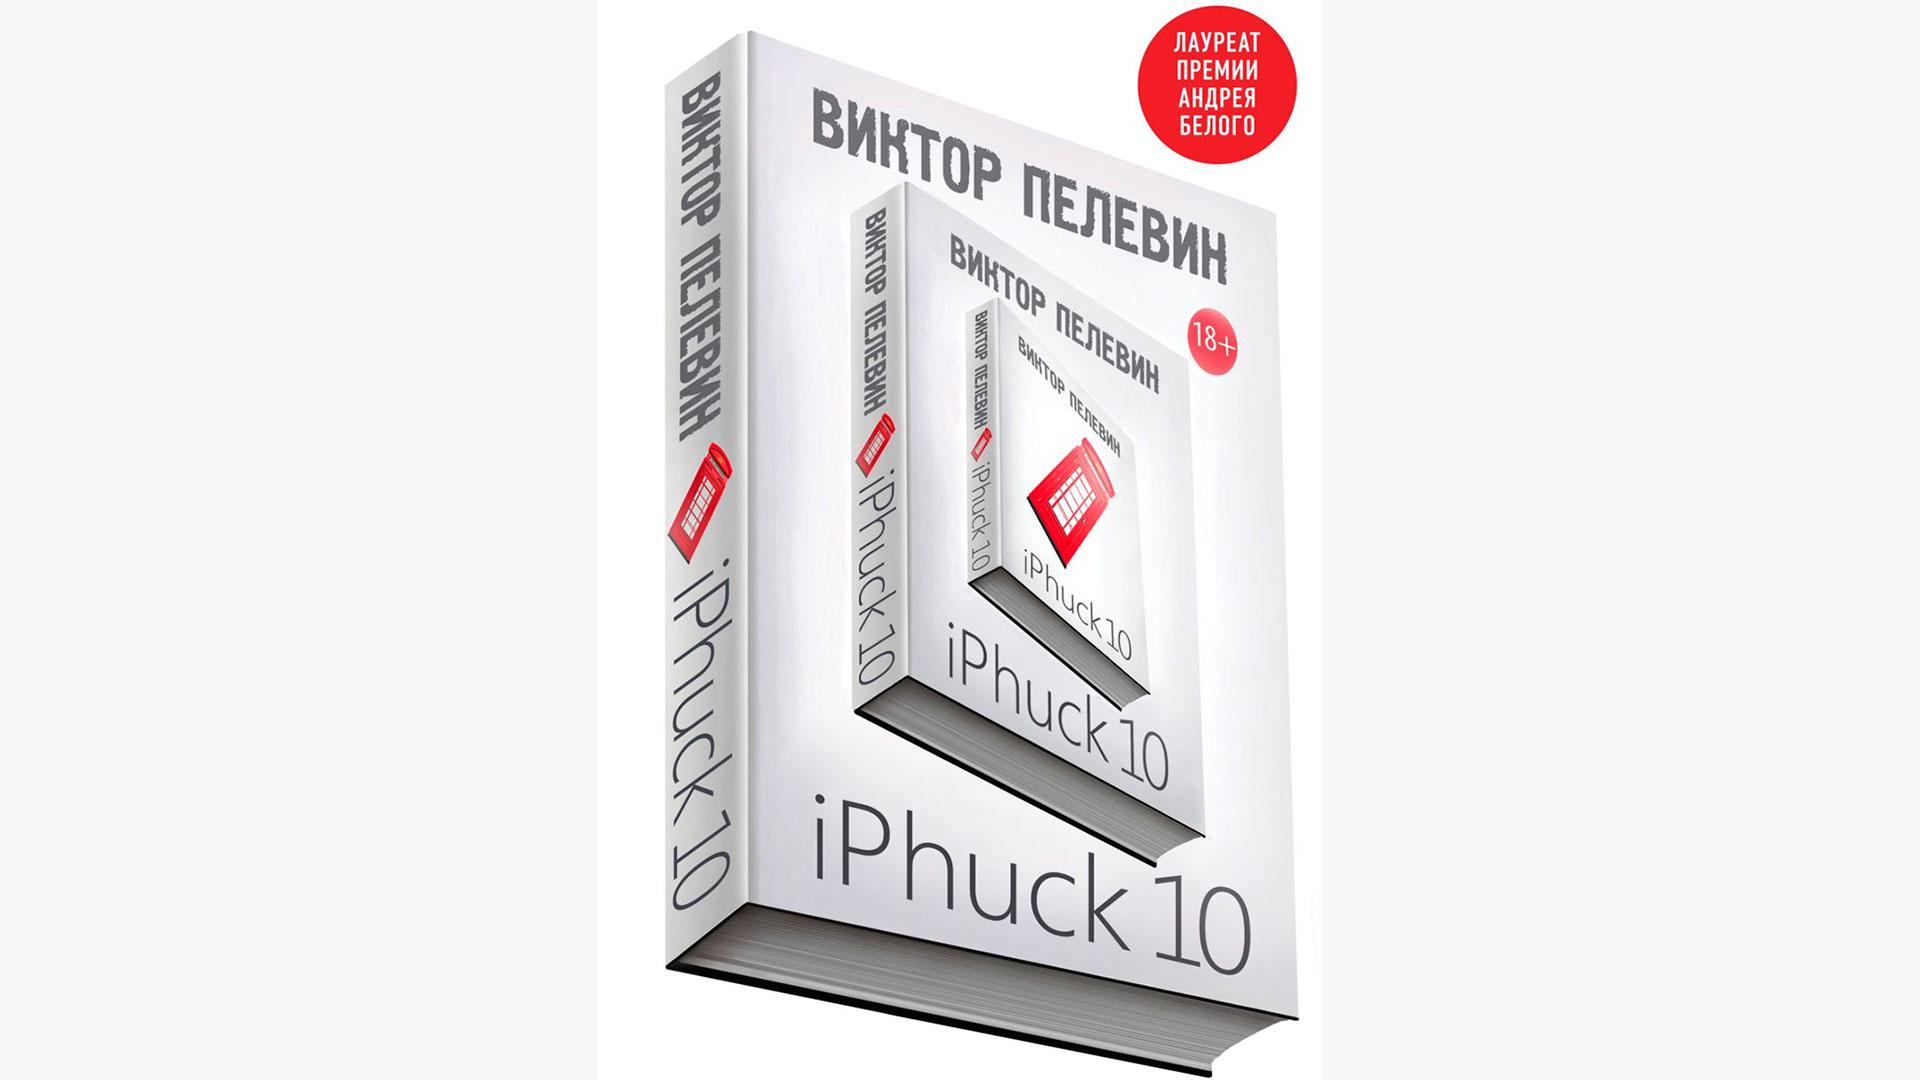 Пелевин iphuck 10 книга. IPHUCK 10, Пелевин в.. Пелевин IPHUCK новинка.